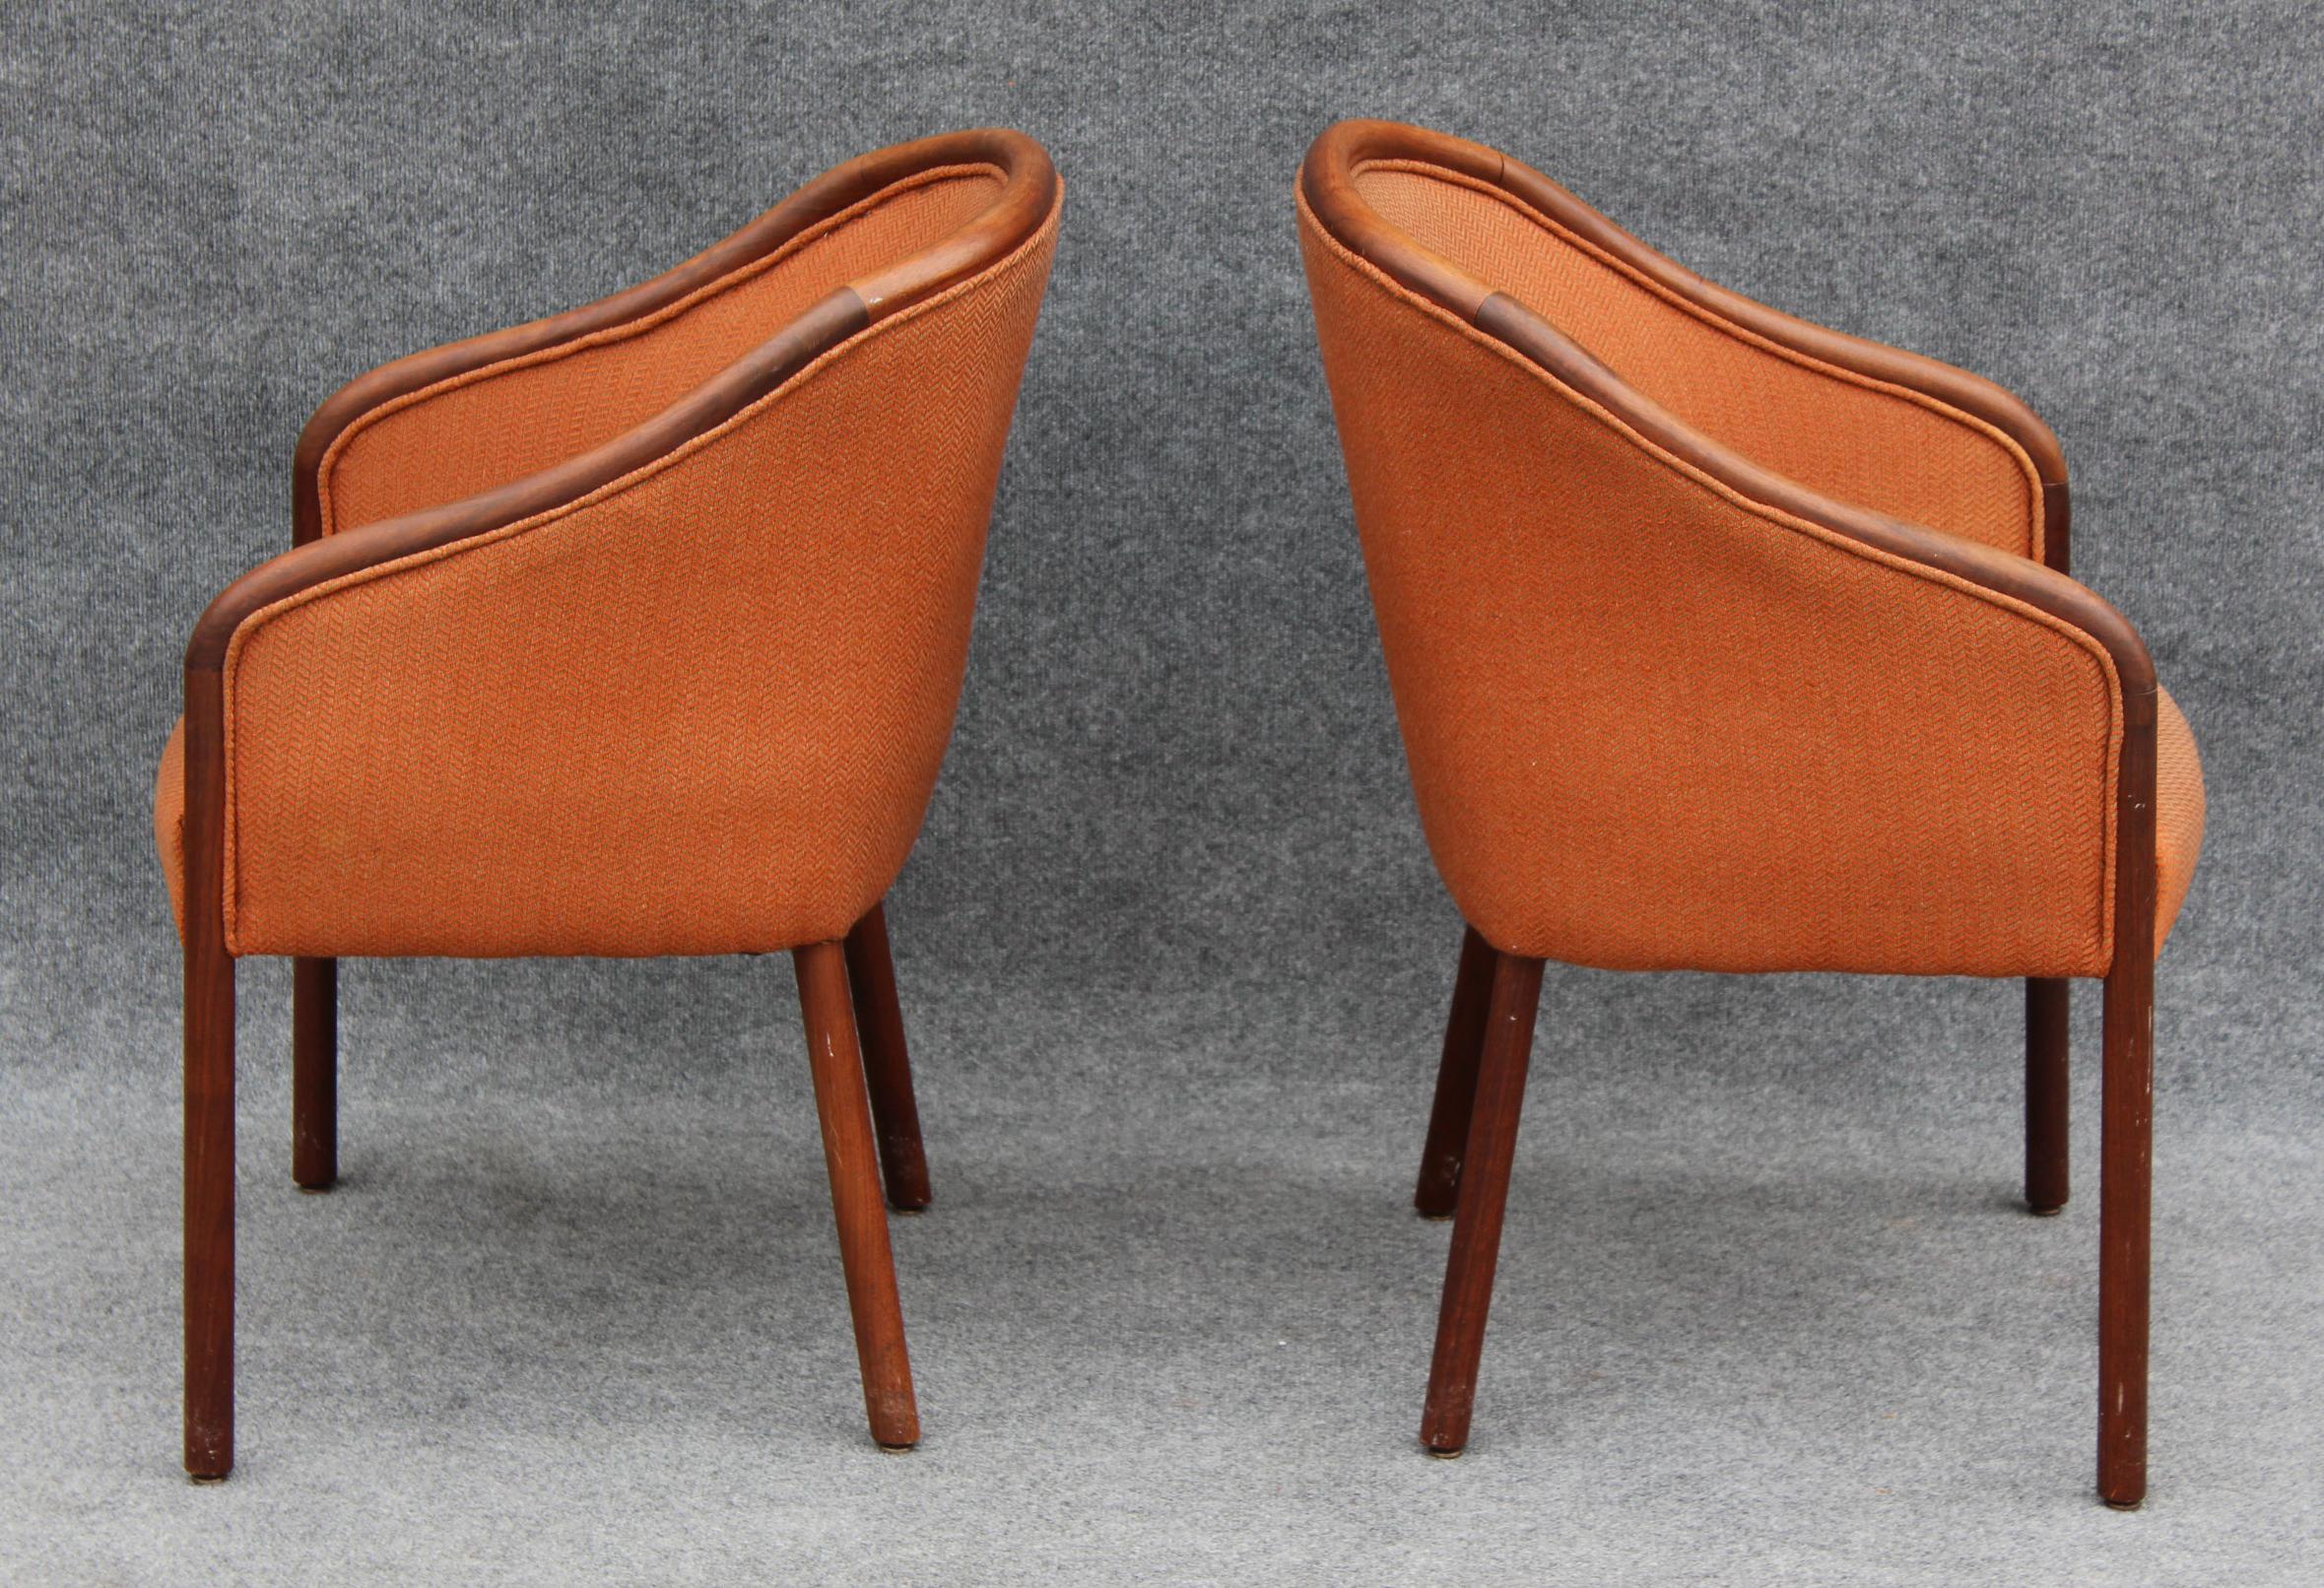 Pair of Mid-Century Modern Walnut Armchair Side Chairs After Ward Bennett 1